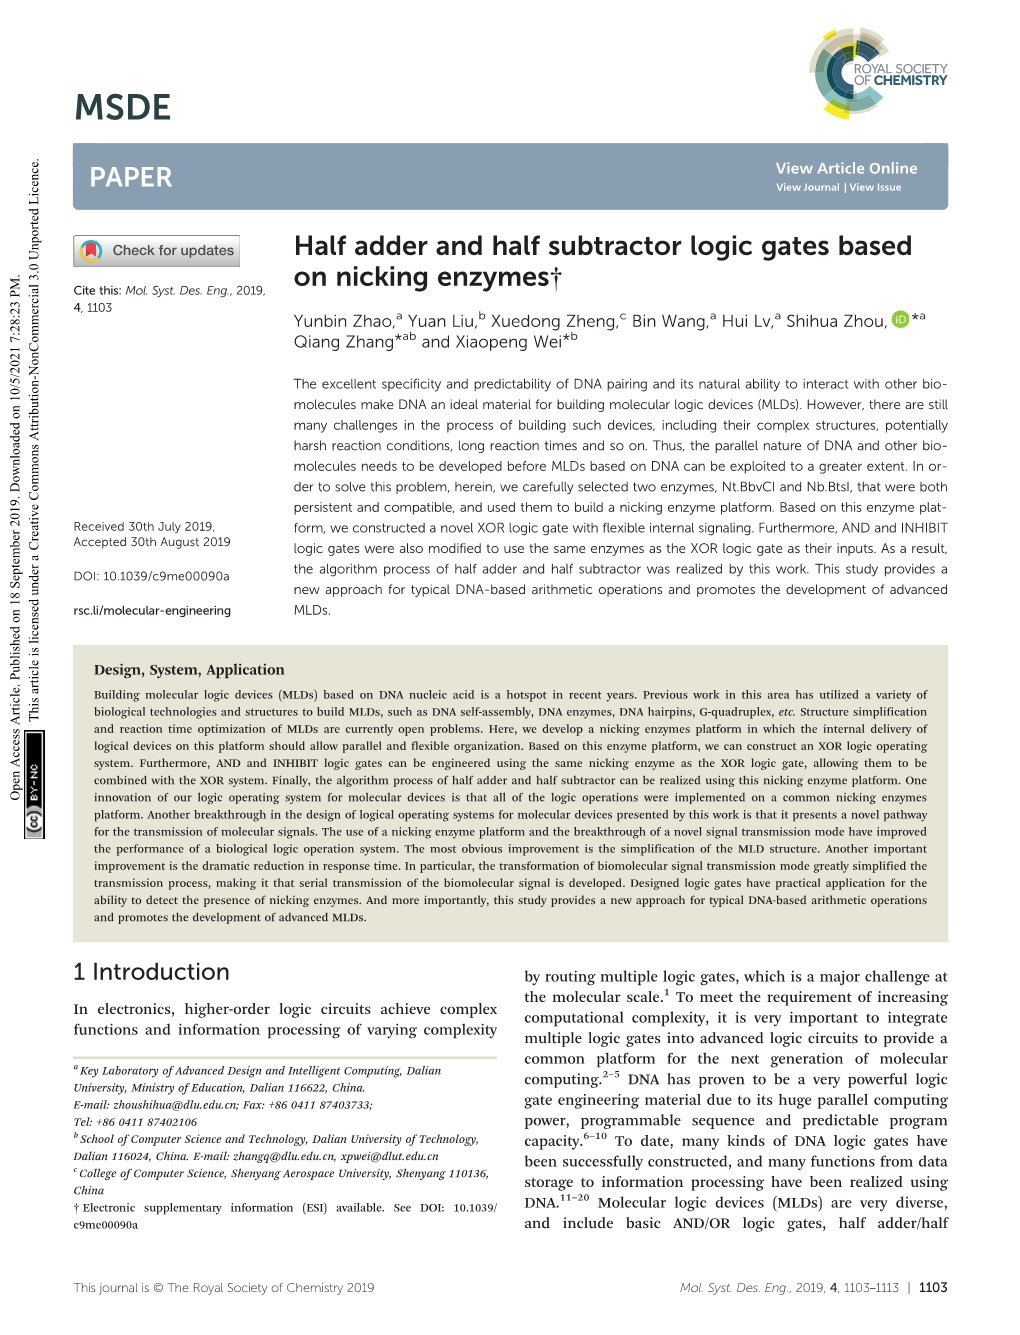 PAPER Half Adder and Half Subtractor Logic Gates Based on Nicking Enzymes